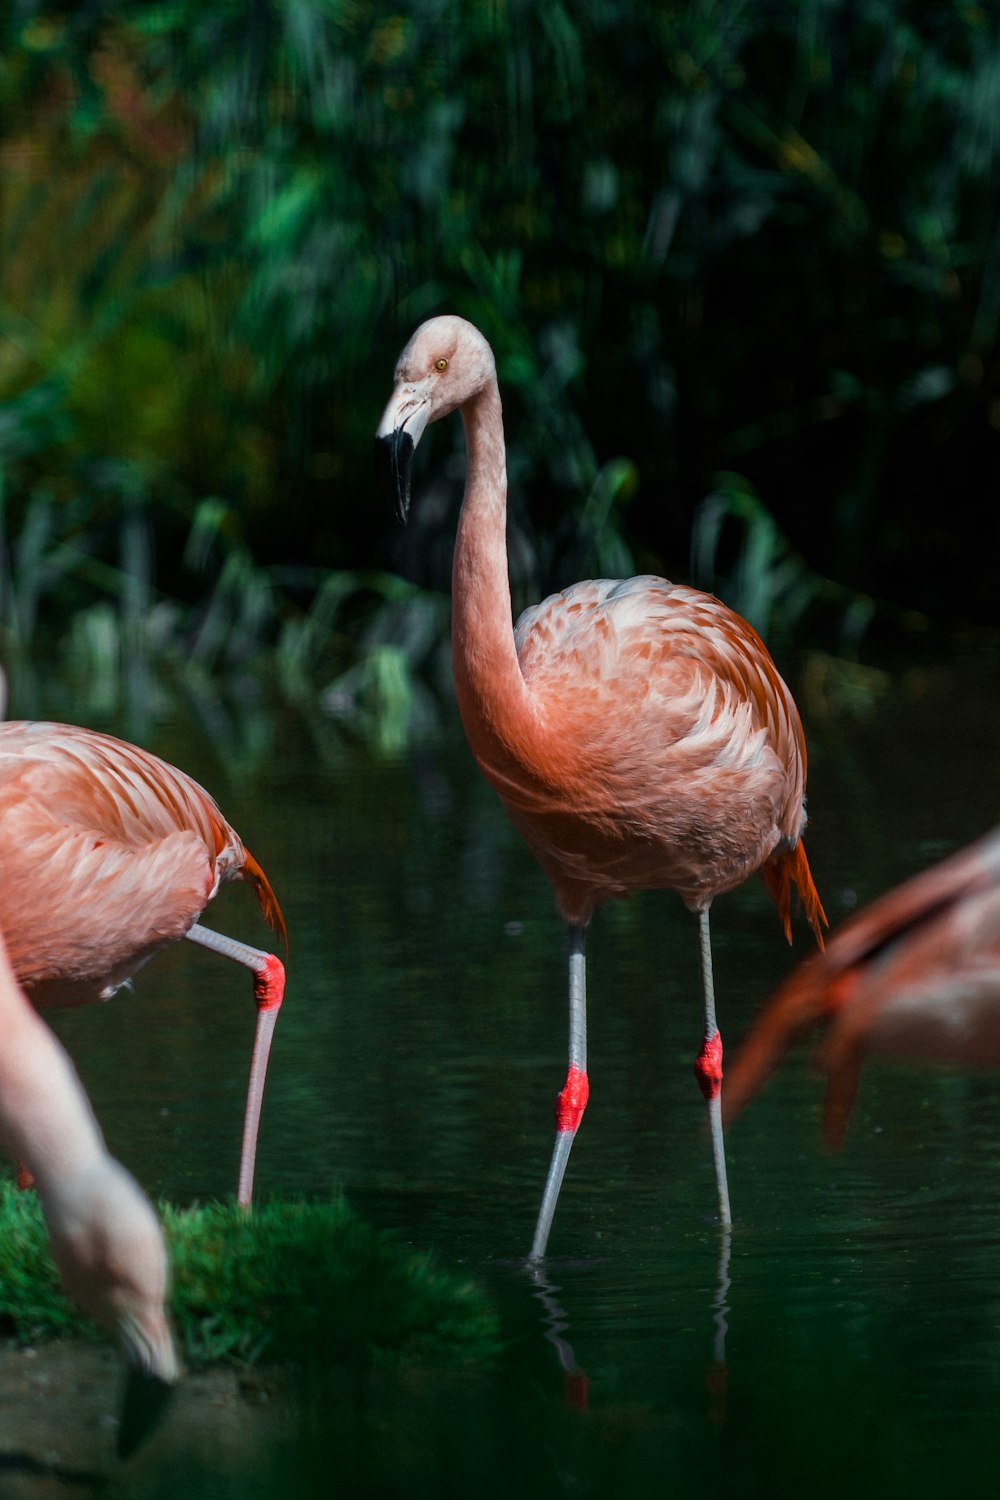 pink flamingos on green grass during daytime